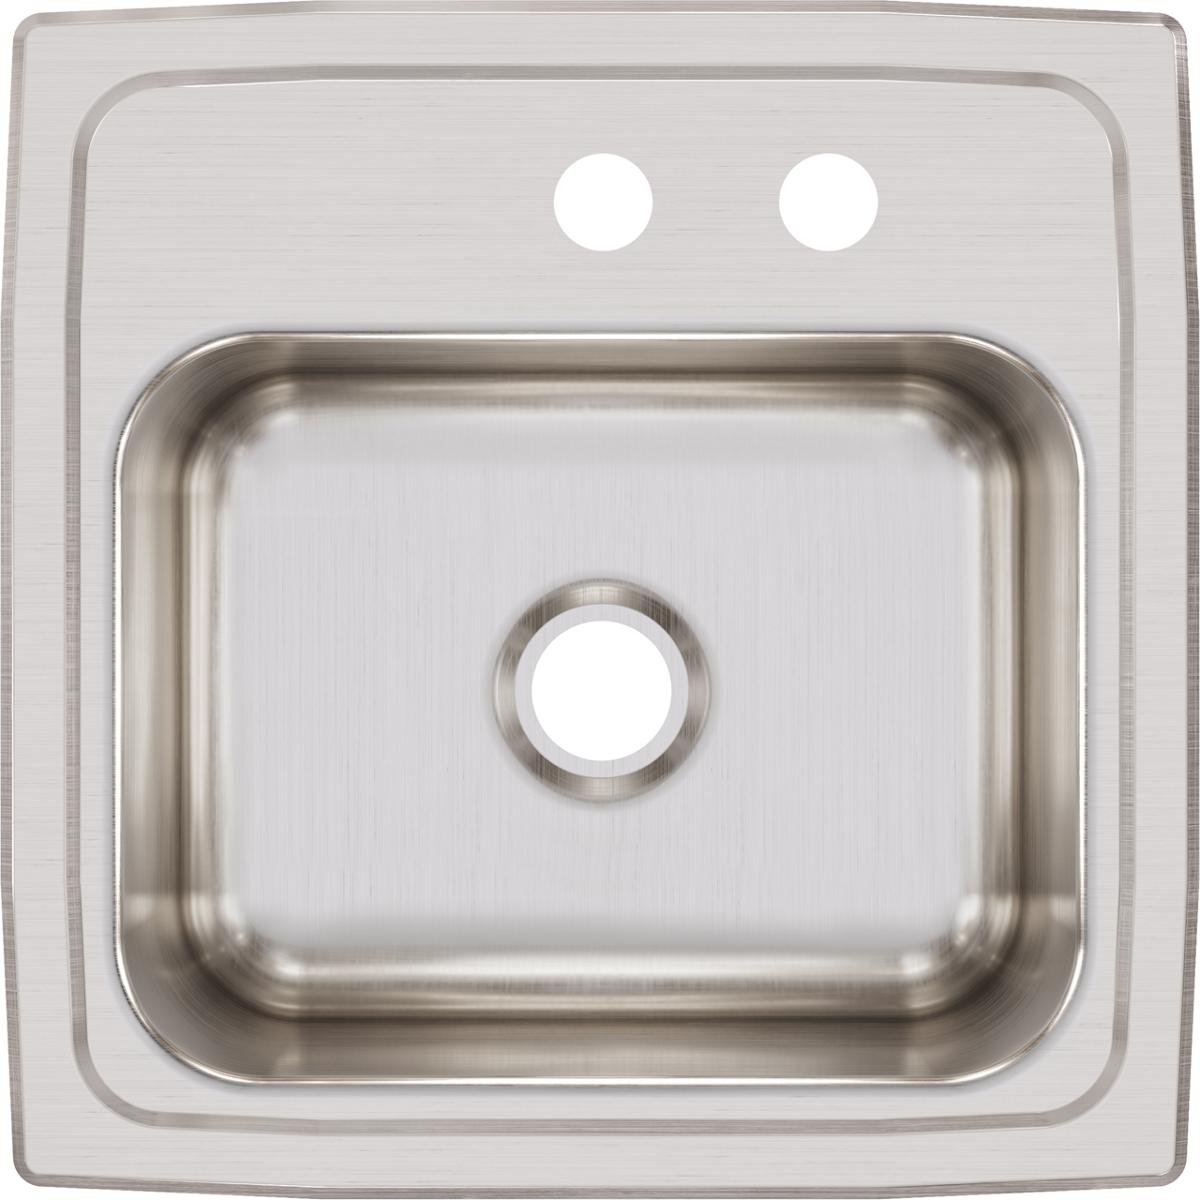 Elkay Lustertone Classic 15" x 15" x 7-1/8" Single Bowl Drop-in Stainless Steel Bar Sink